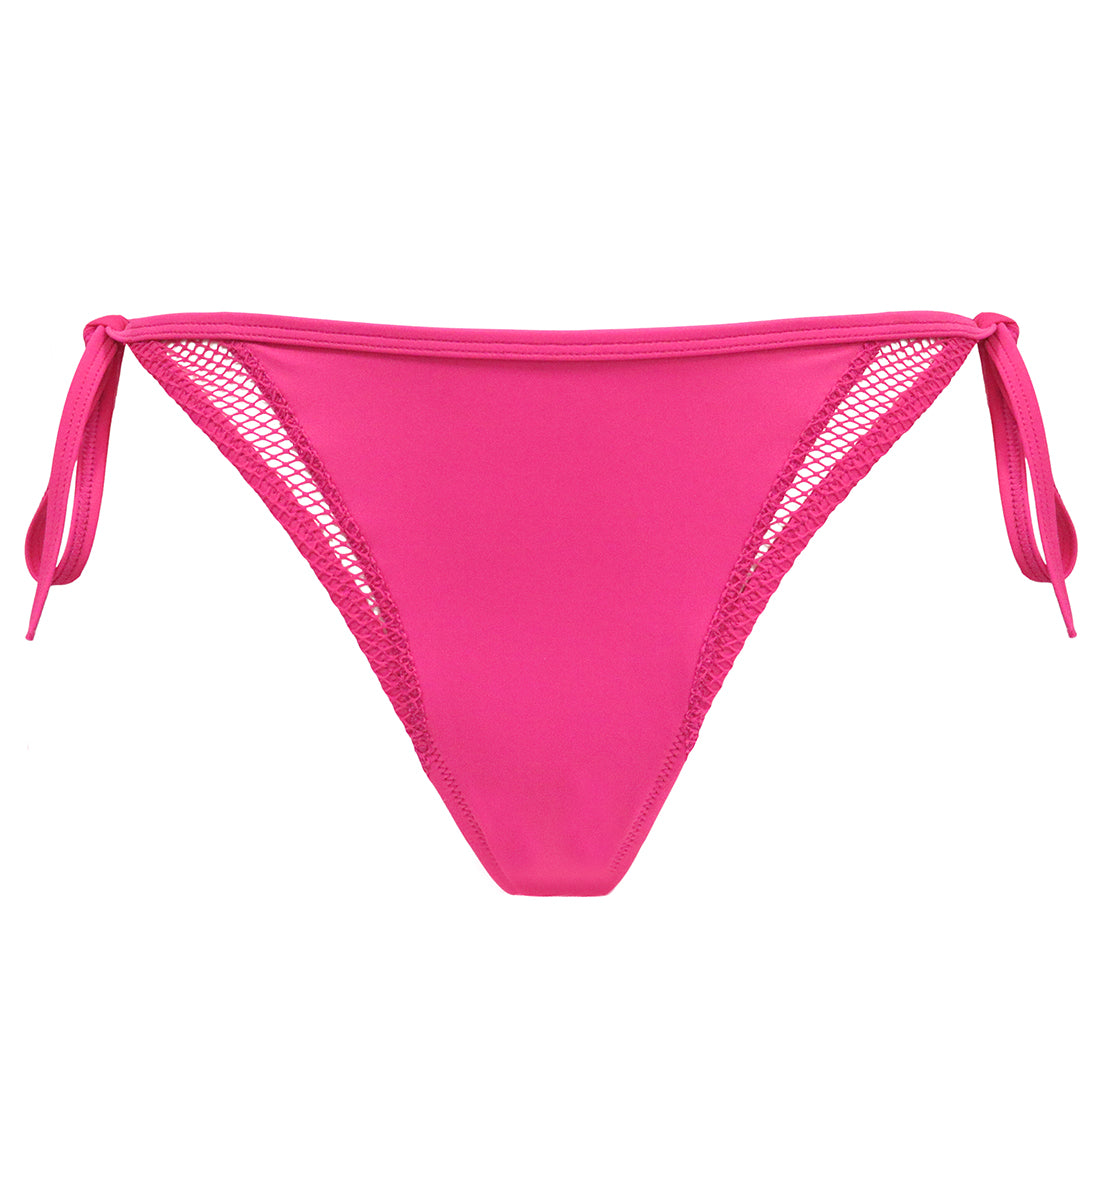 Pour Moi Glamazon High Leg Tie Side Swim Brief (30018),XS,Hot Pink - Hot Pink,XS